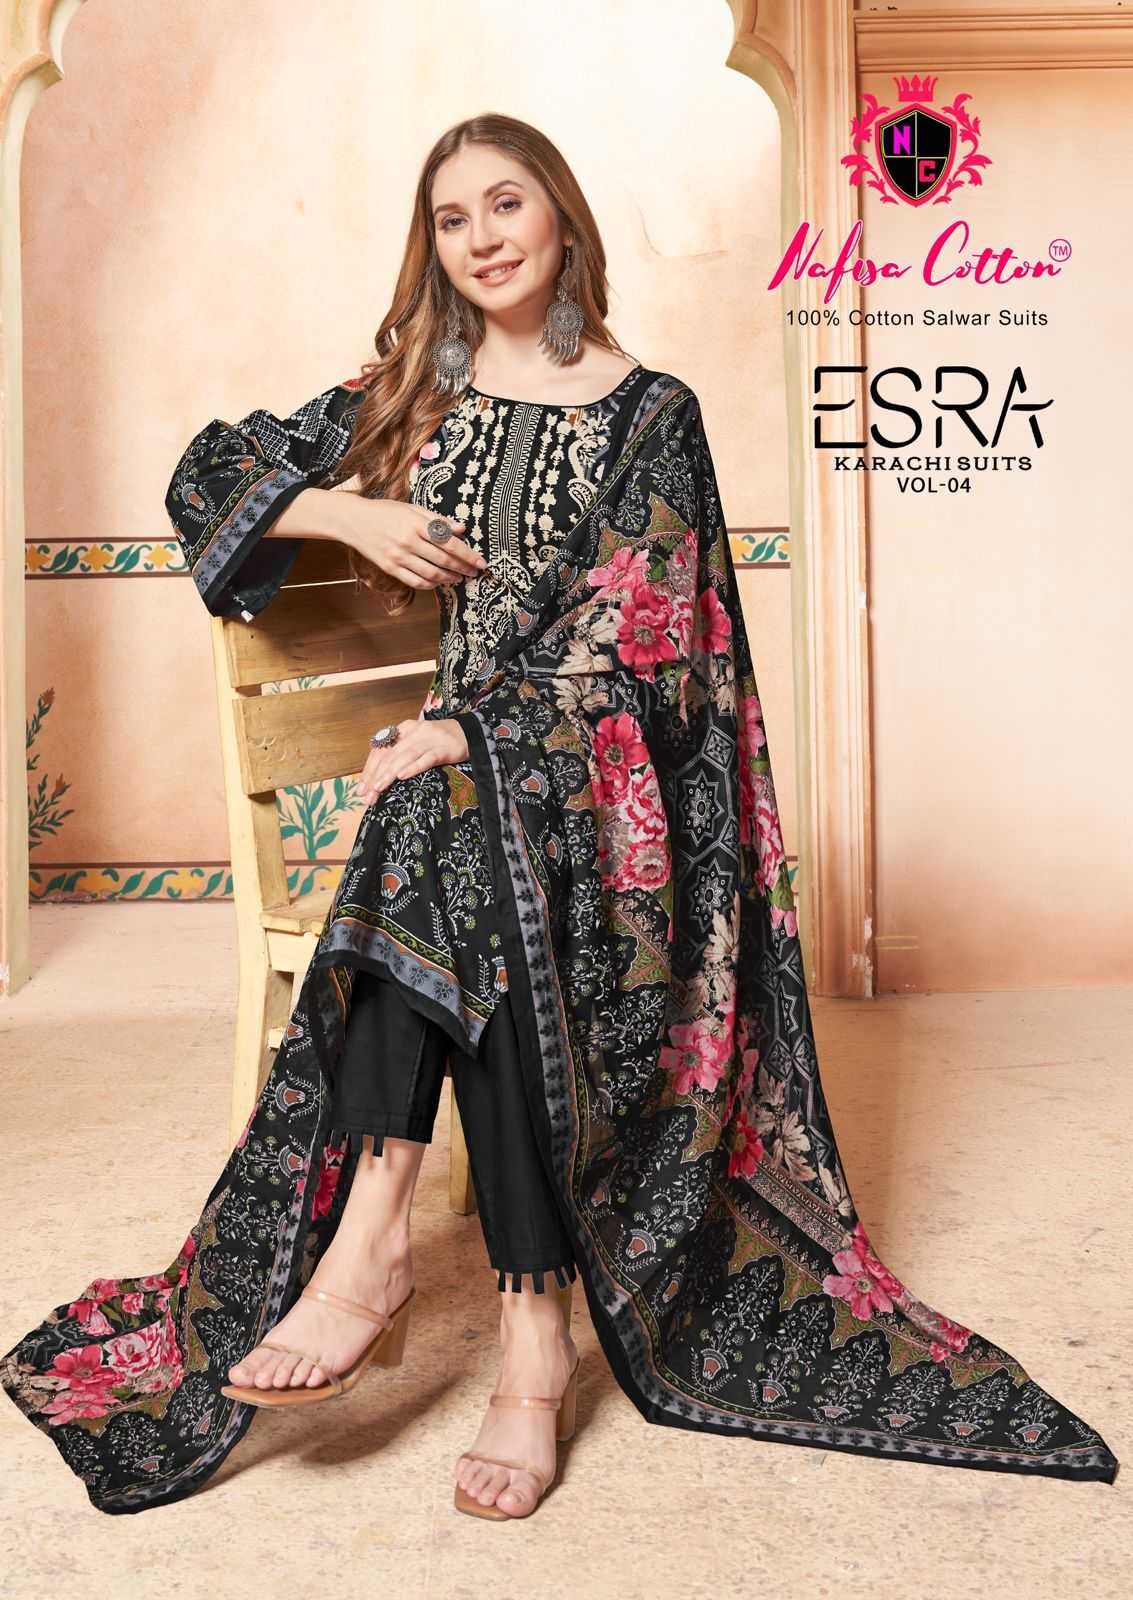 nafisa cotton esra karachi suits vol 4 pakistani casual wear unstitch salawar kameez